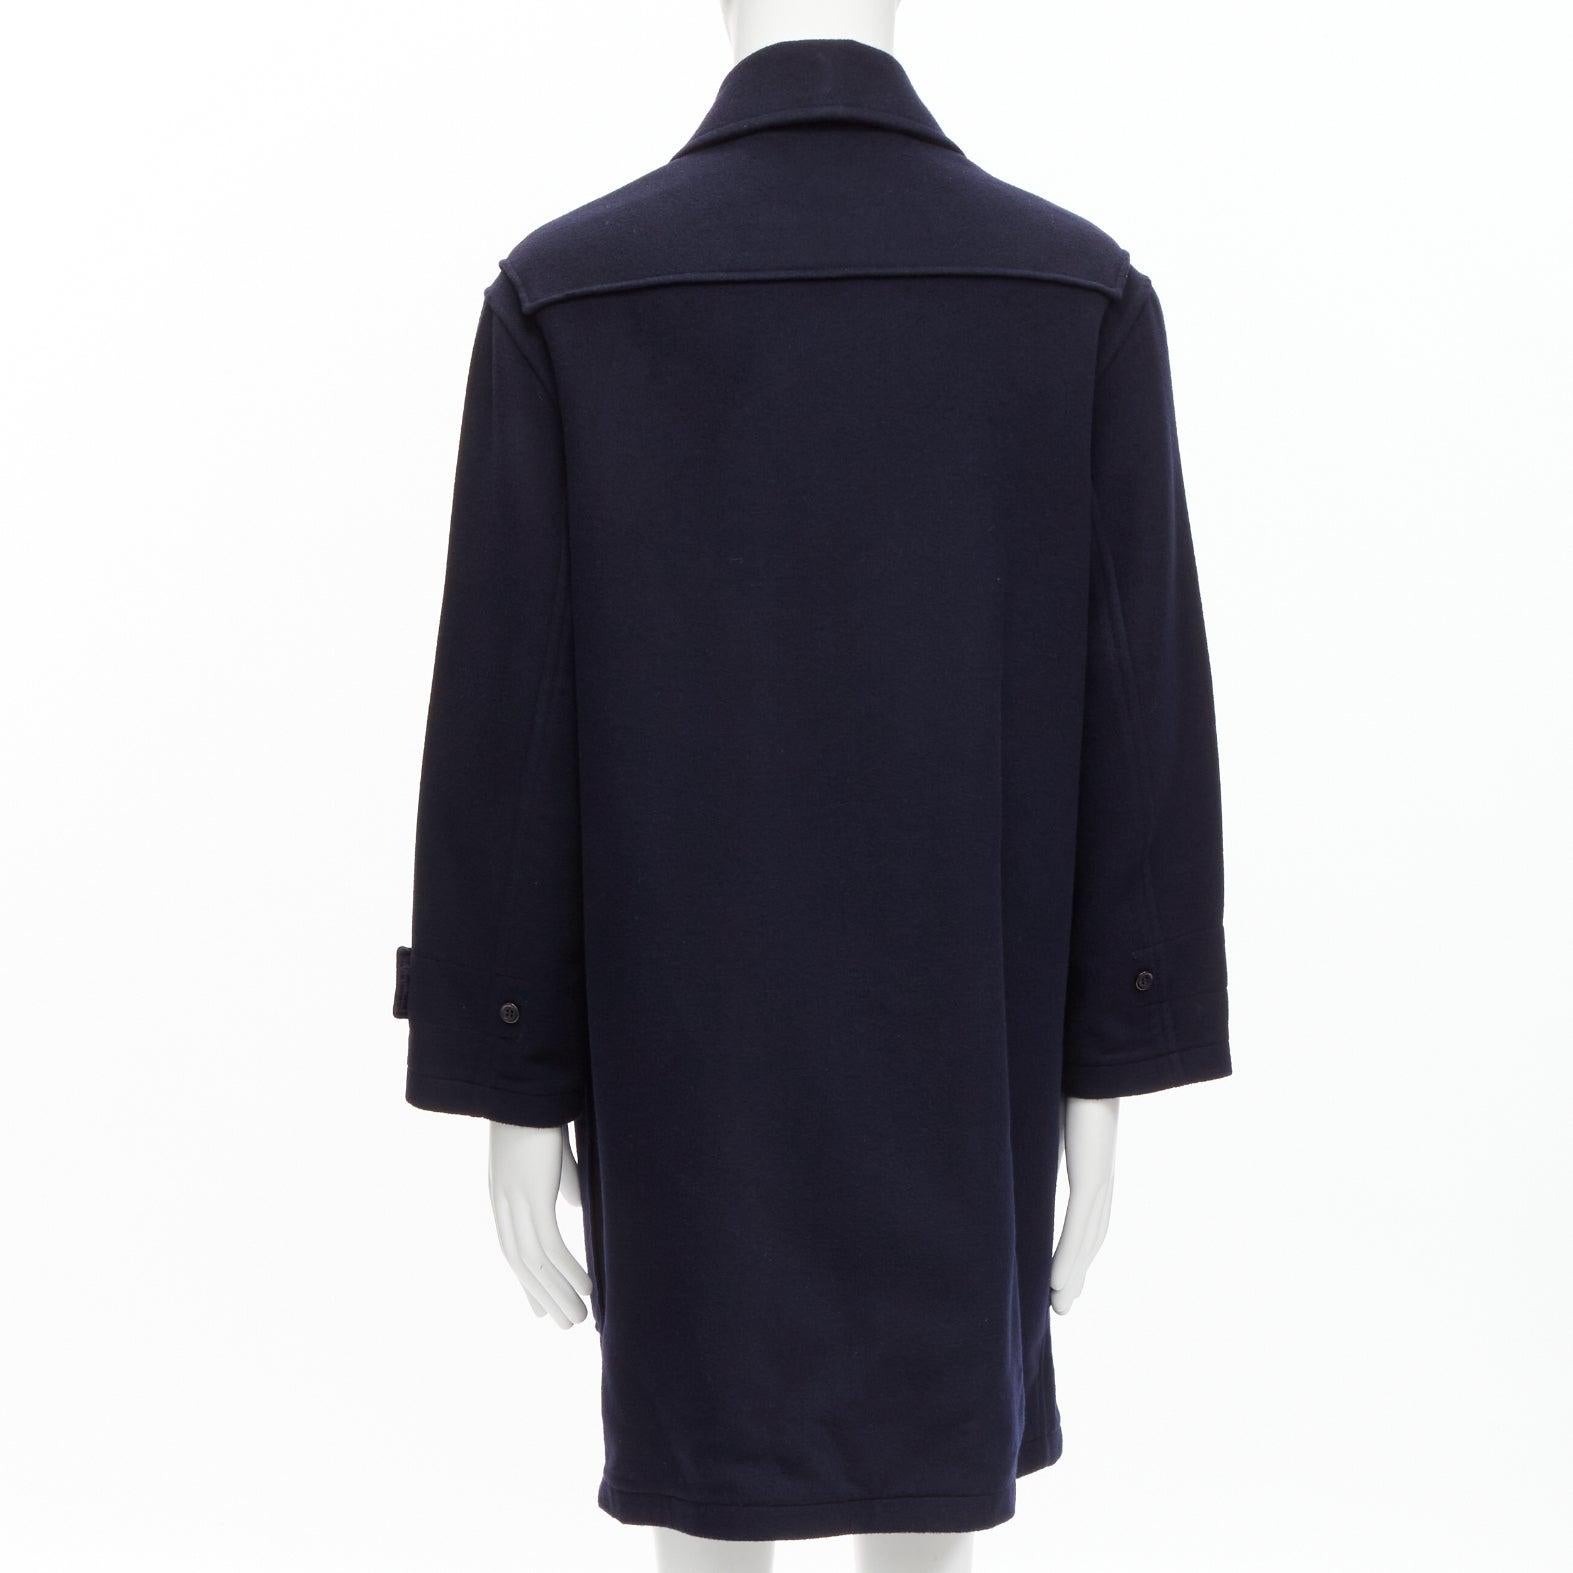 RALPH LAUREN Label Fintona 100% wool navy silver toggle buckle coat Size 6 M For Sale 2